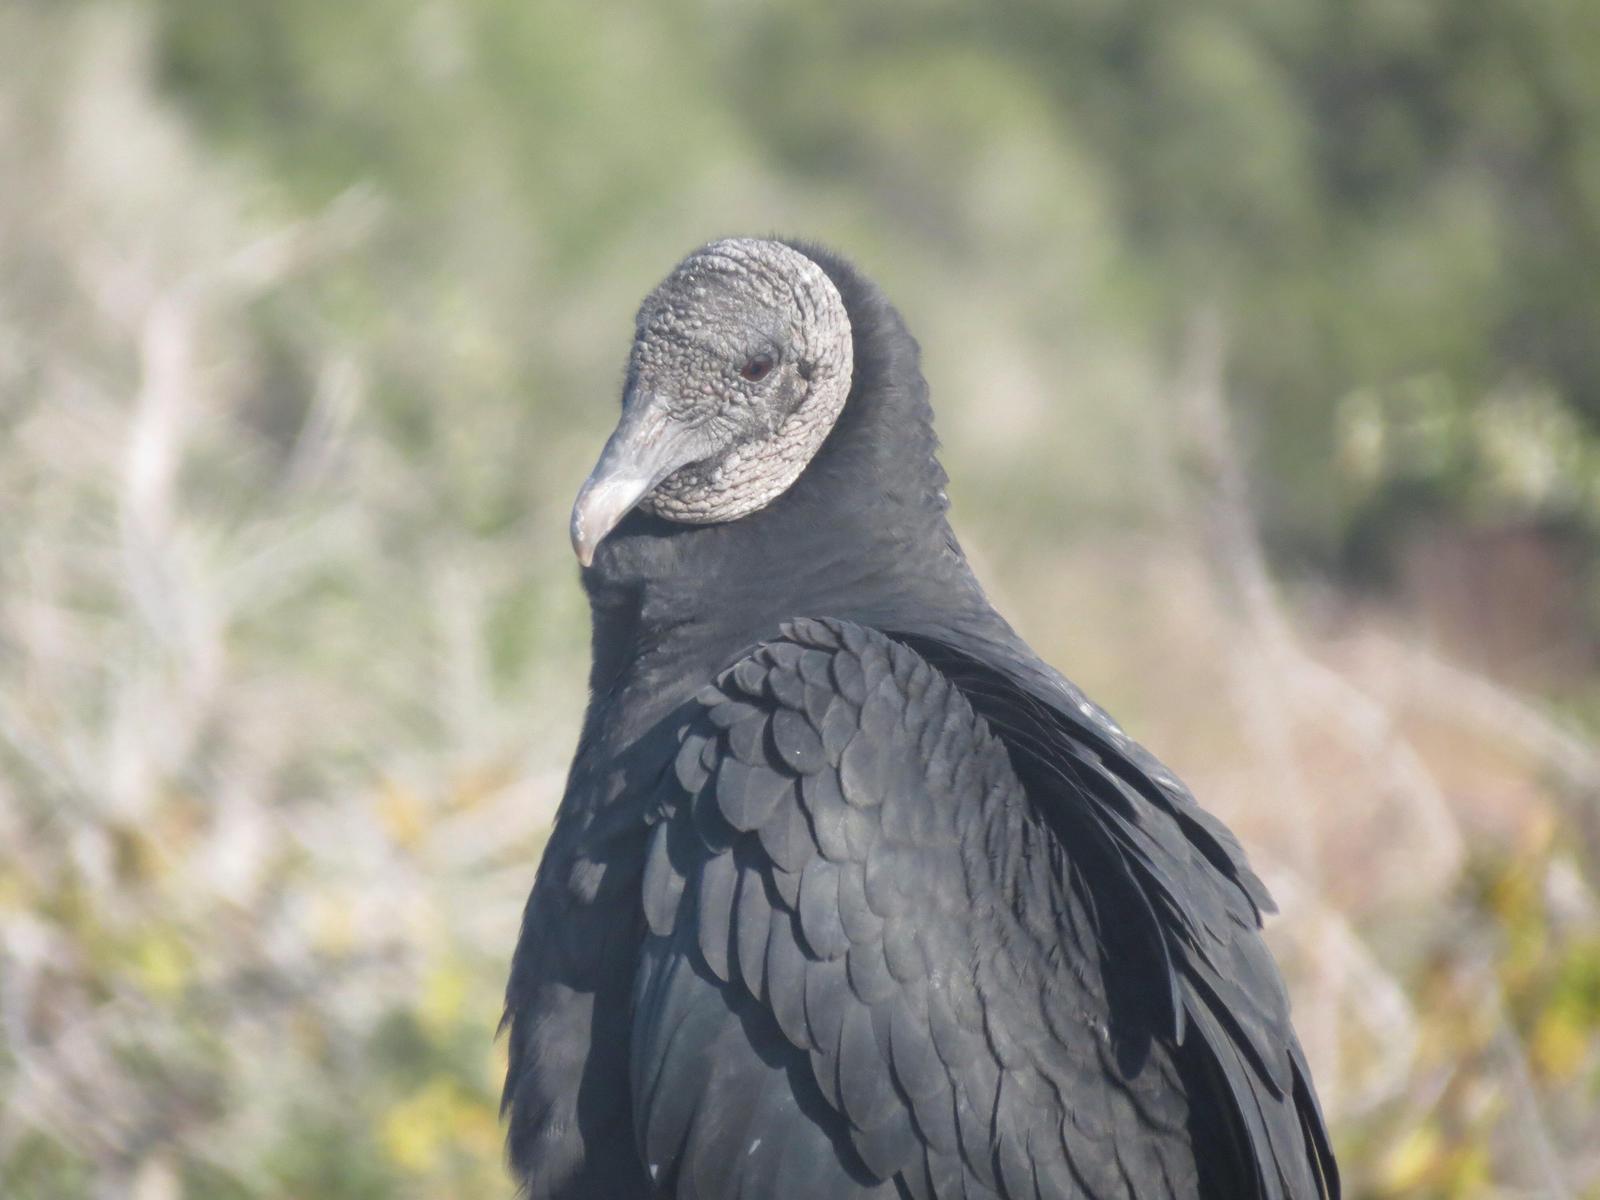 Black Vulture Photo by Nolan Keyes